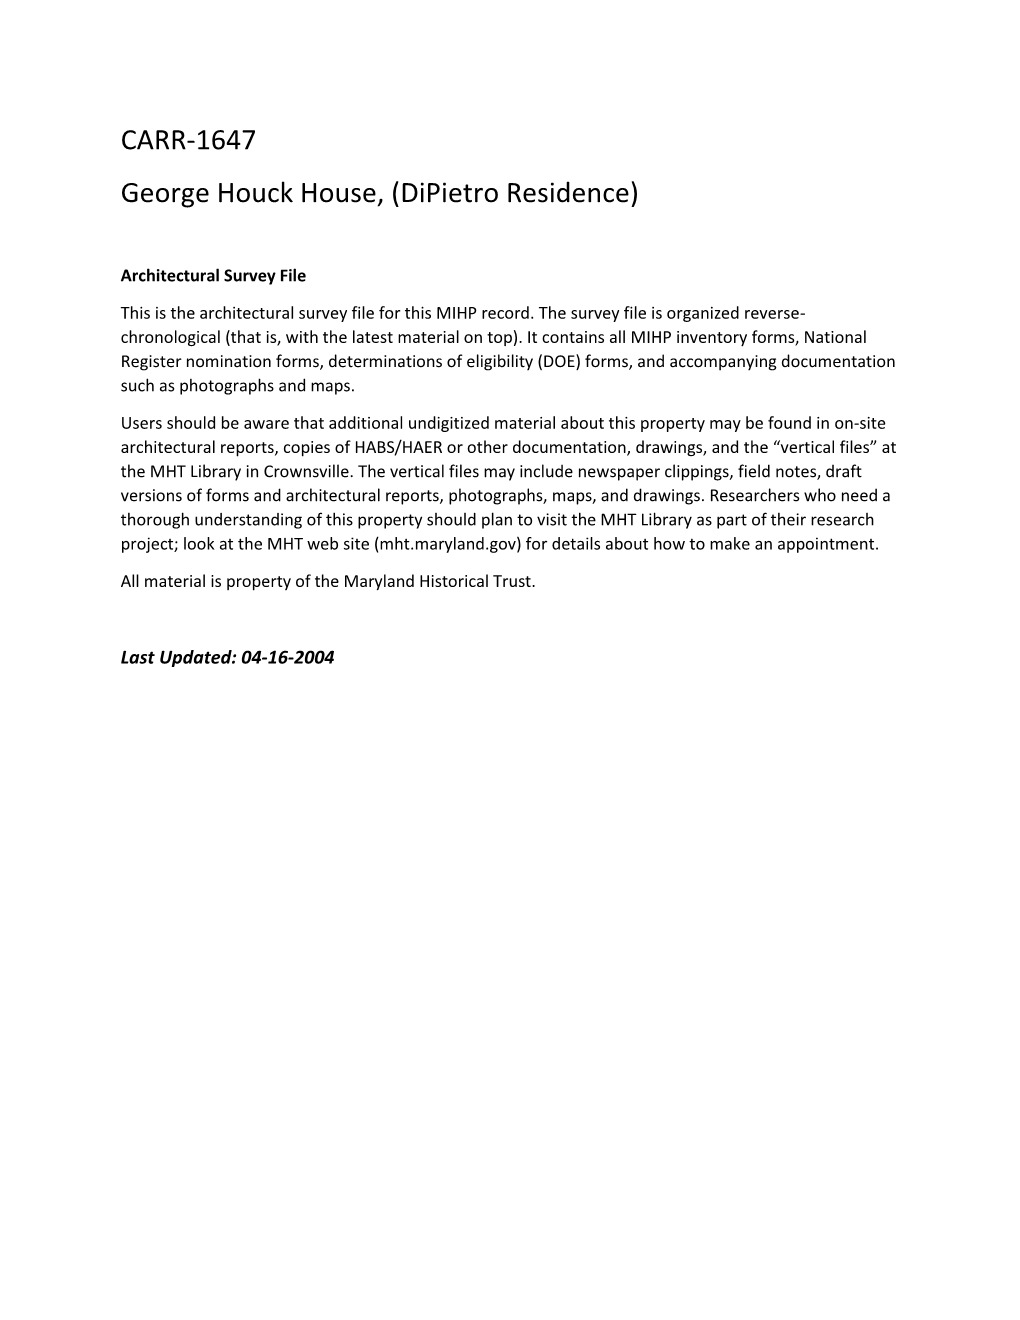 CARR-1647 George Houck House, (Dipietro Residence)